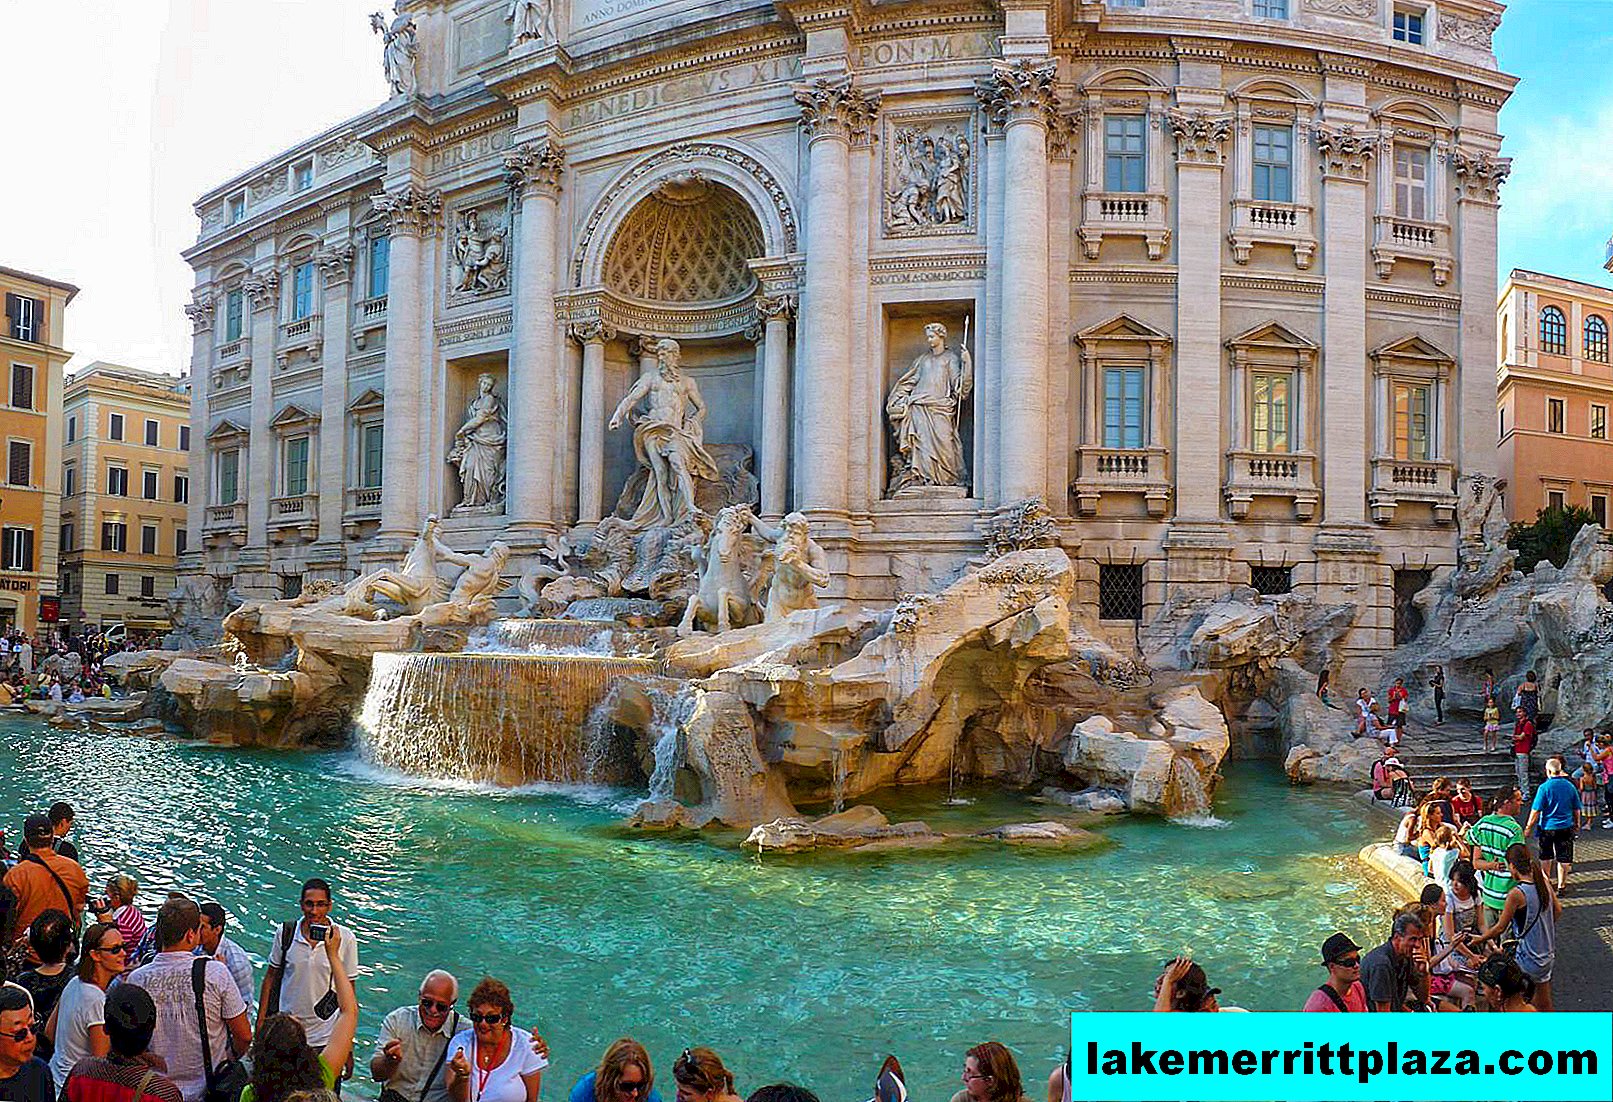 Italy: Trevi Fountain - a symbol of Roman Baroque